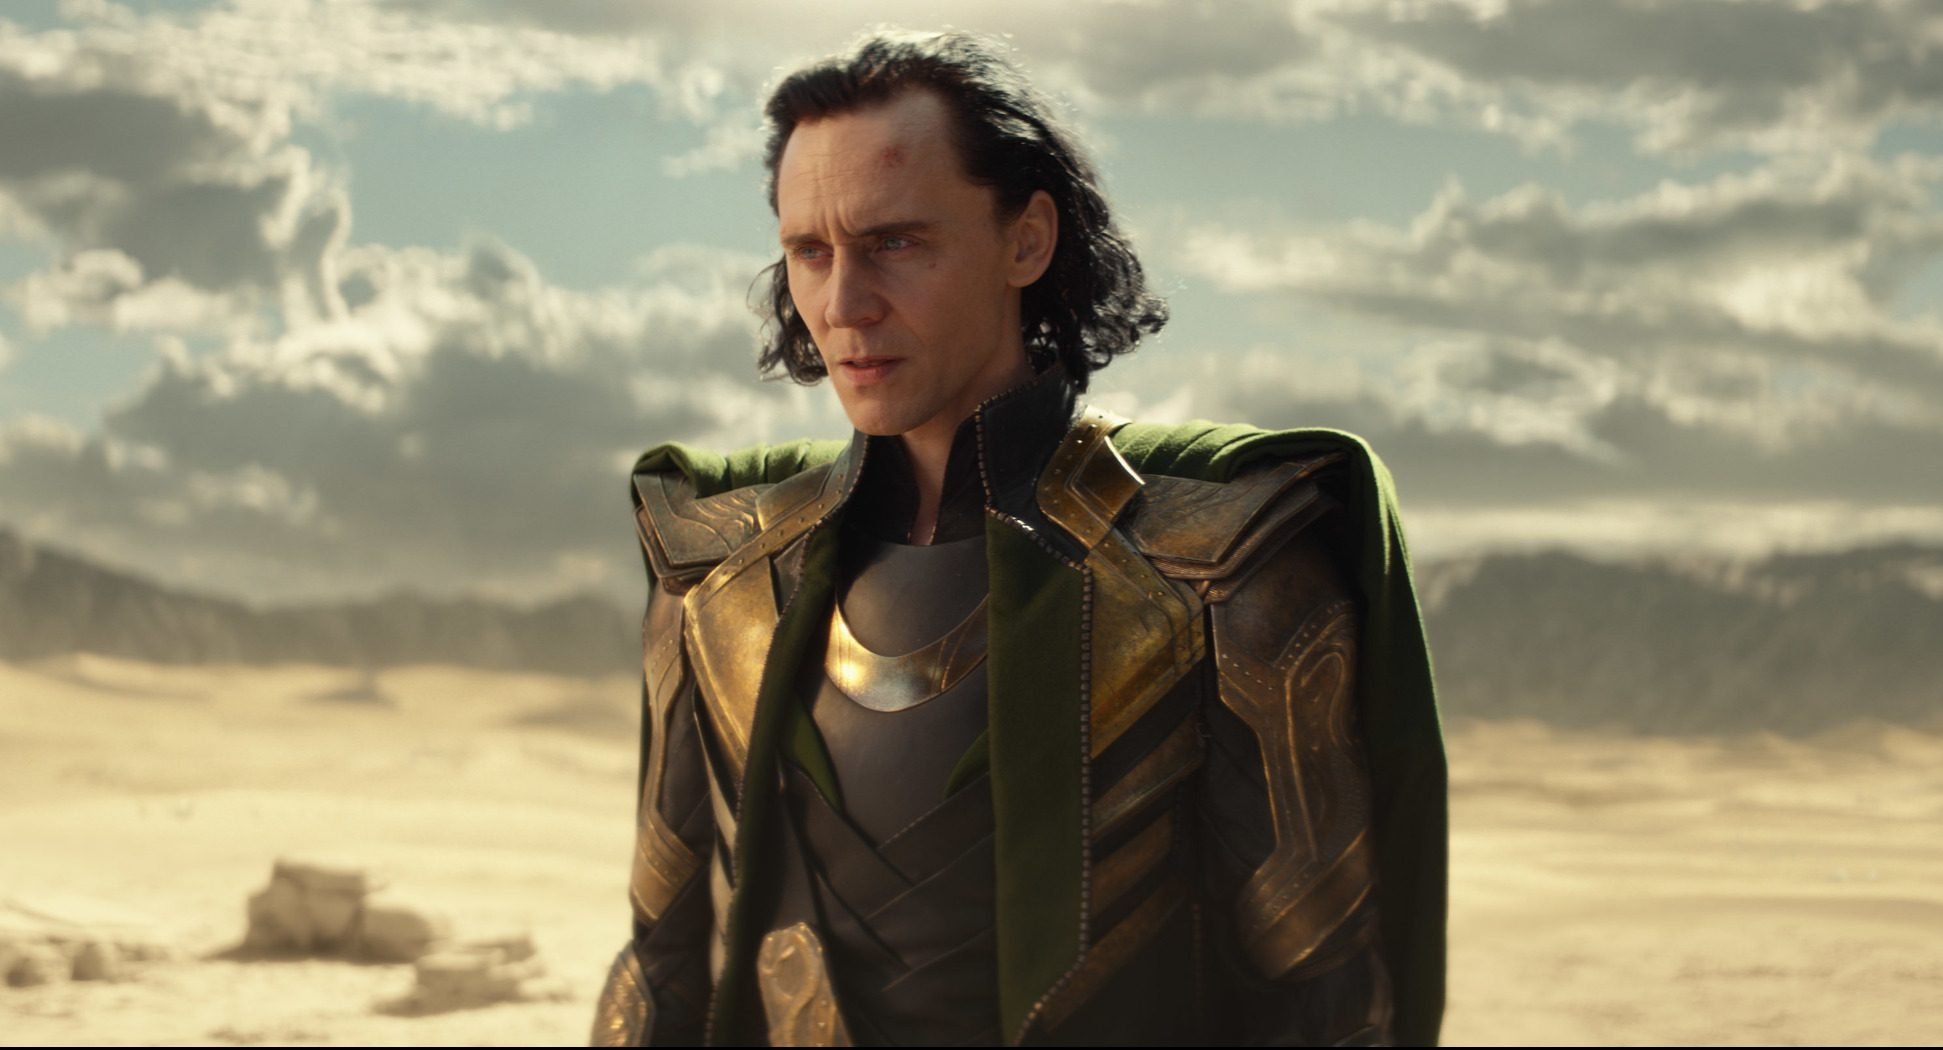 Loki star Tom Hiddleston standing in a desert landscape after his Avengers: Endgame escape